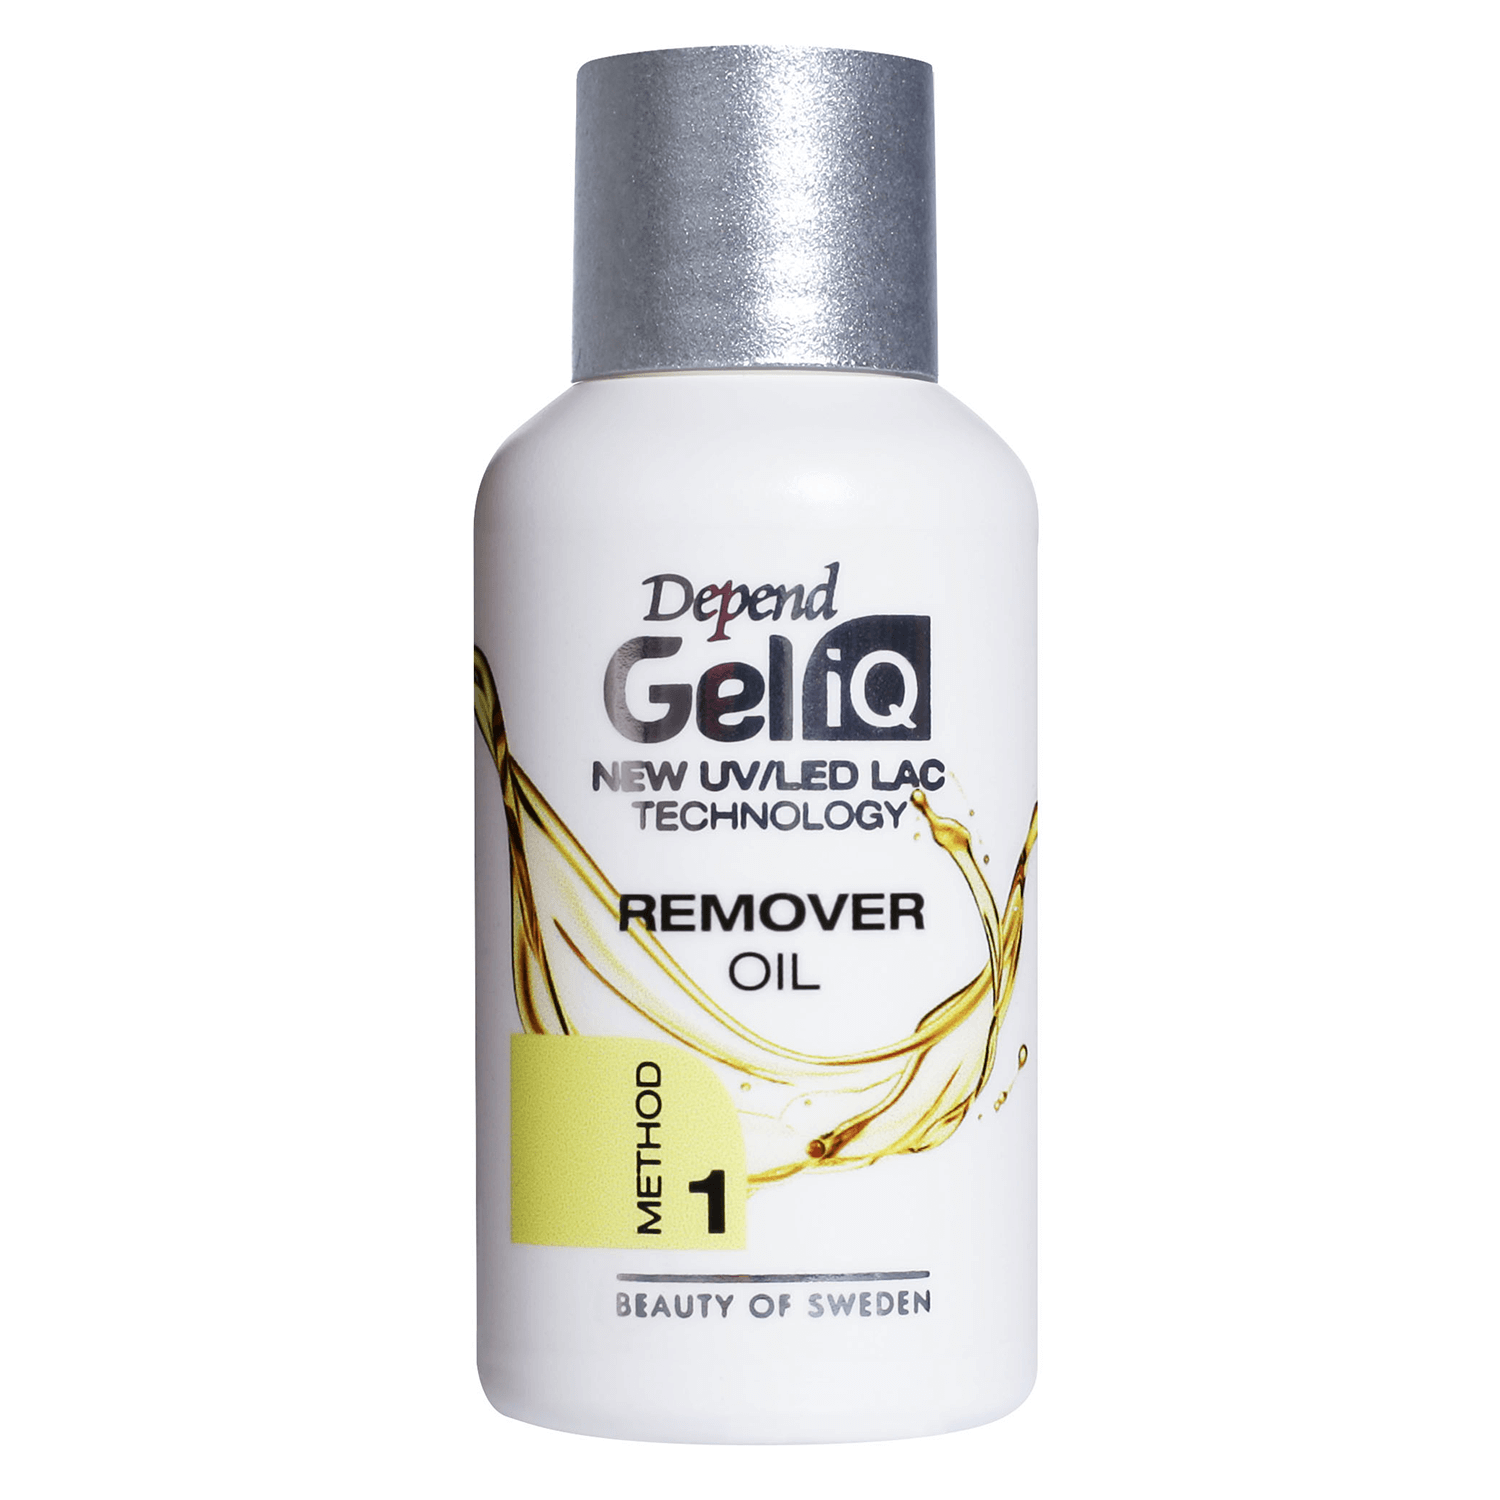 Image du produit de Gel iQ Cleanser & Remover - Remover Oil Method 1